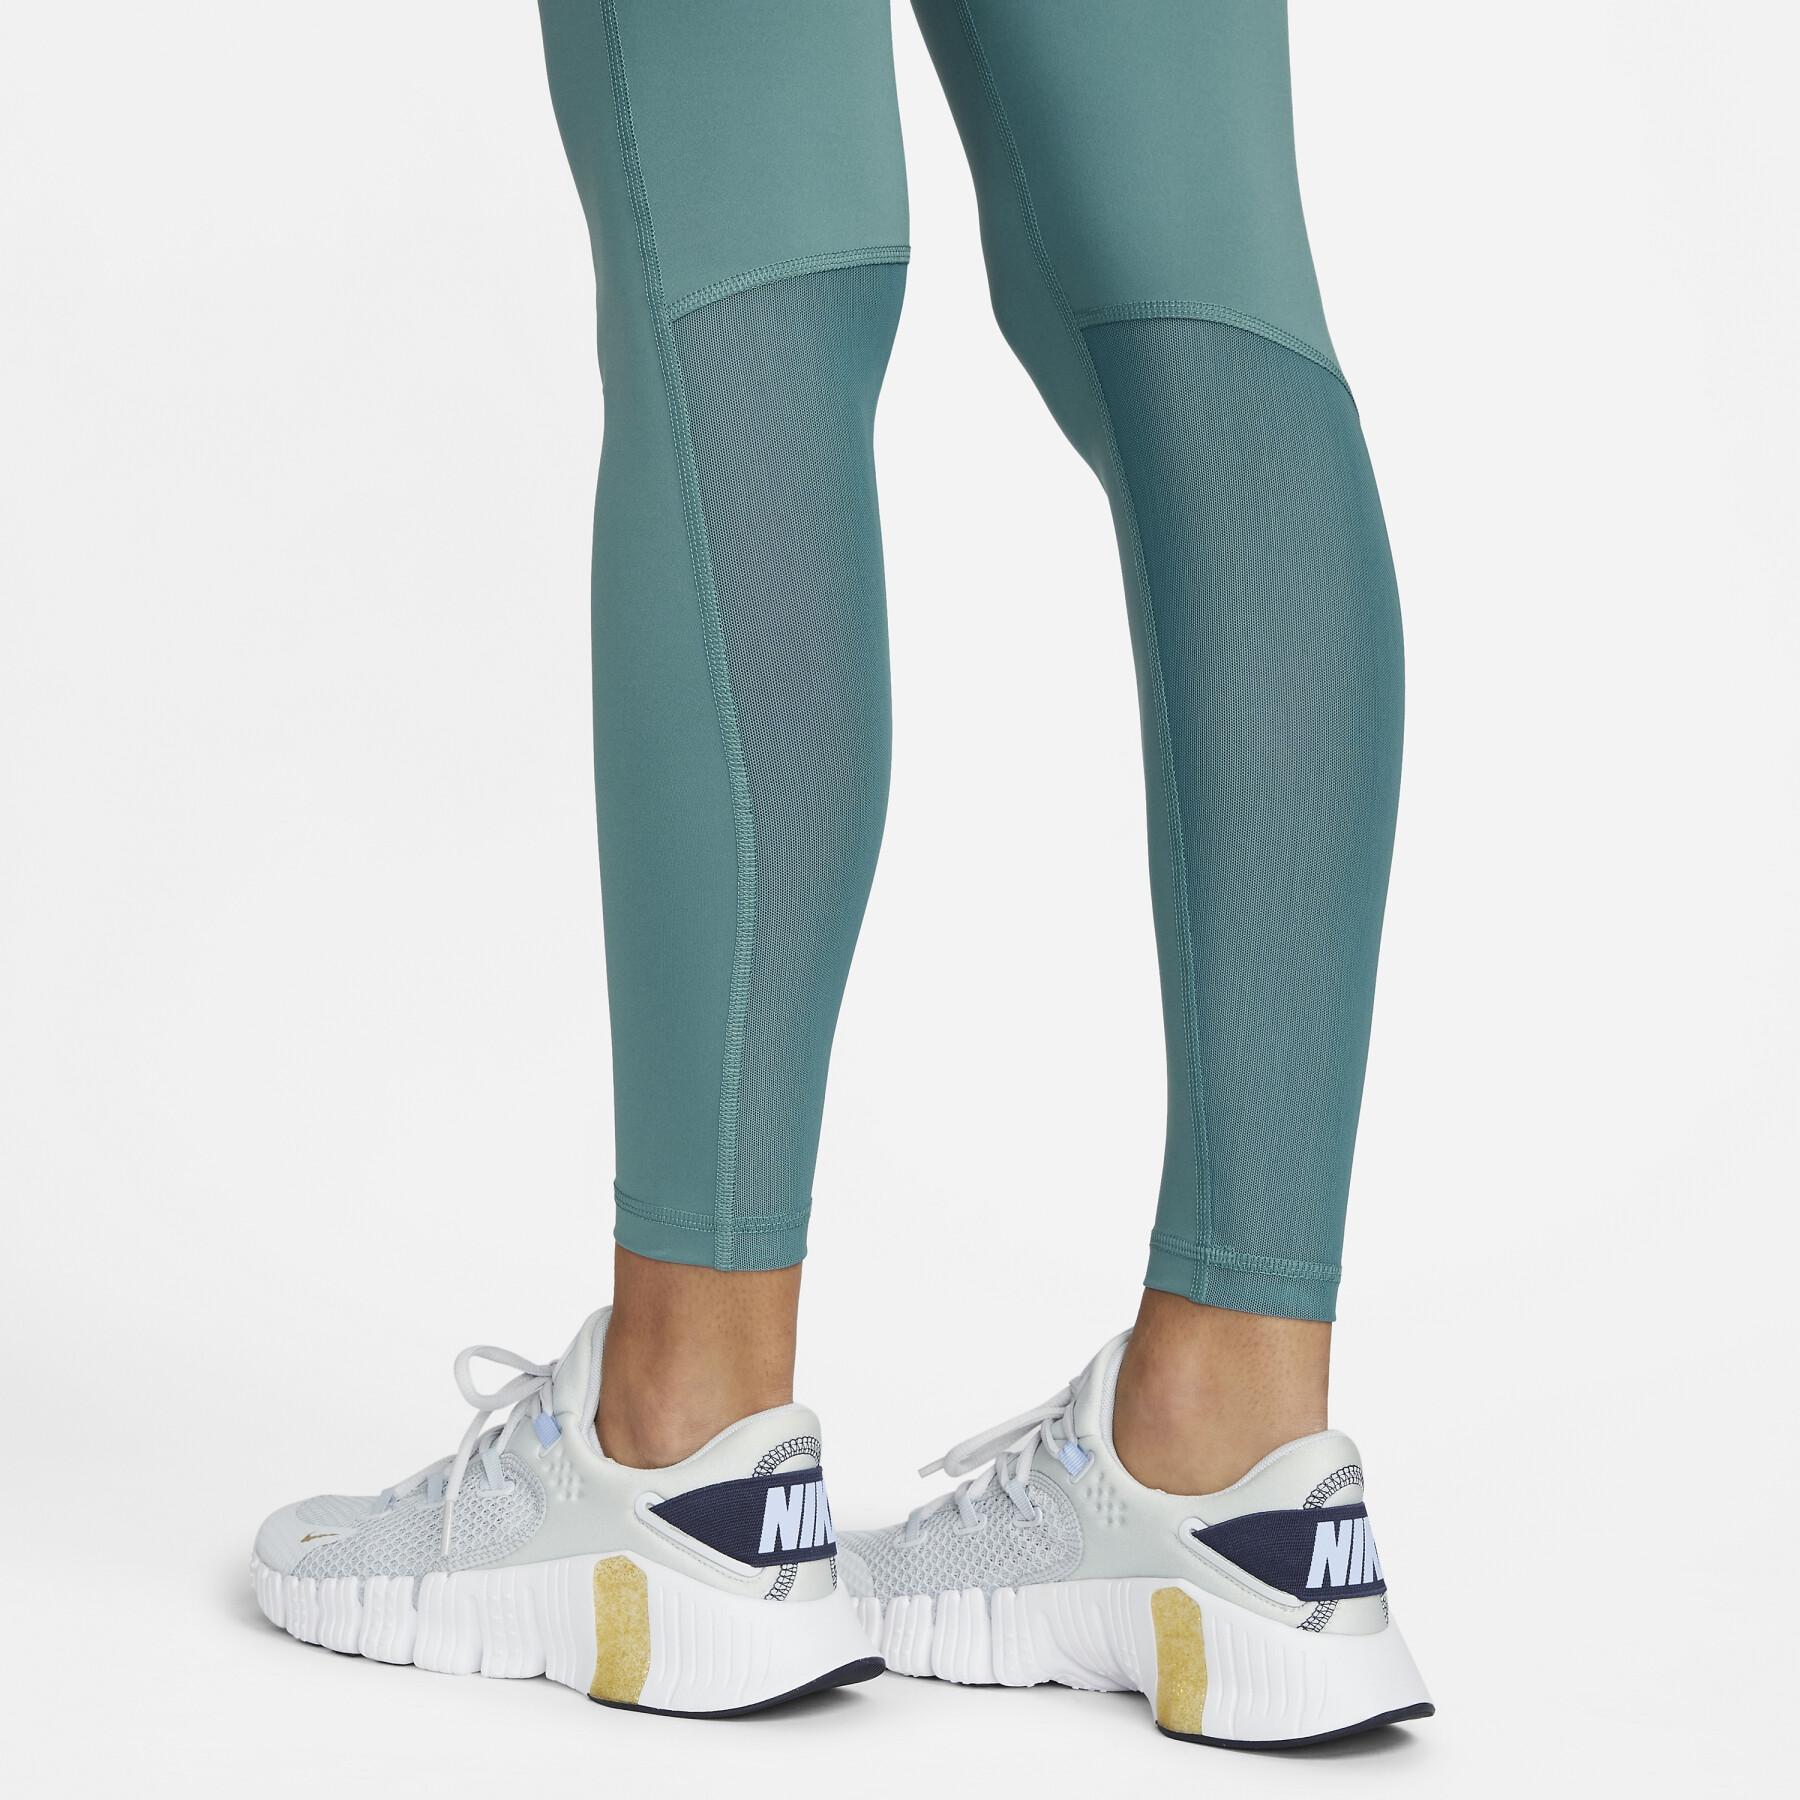 Legging vrouw Nike Pro 365